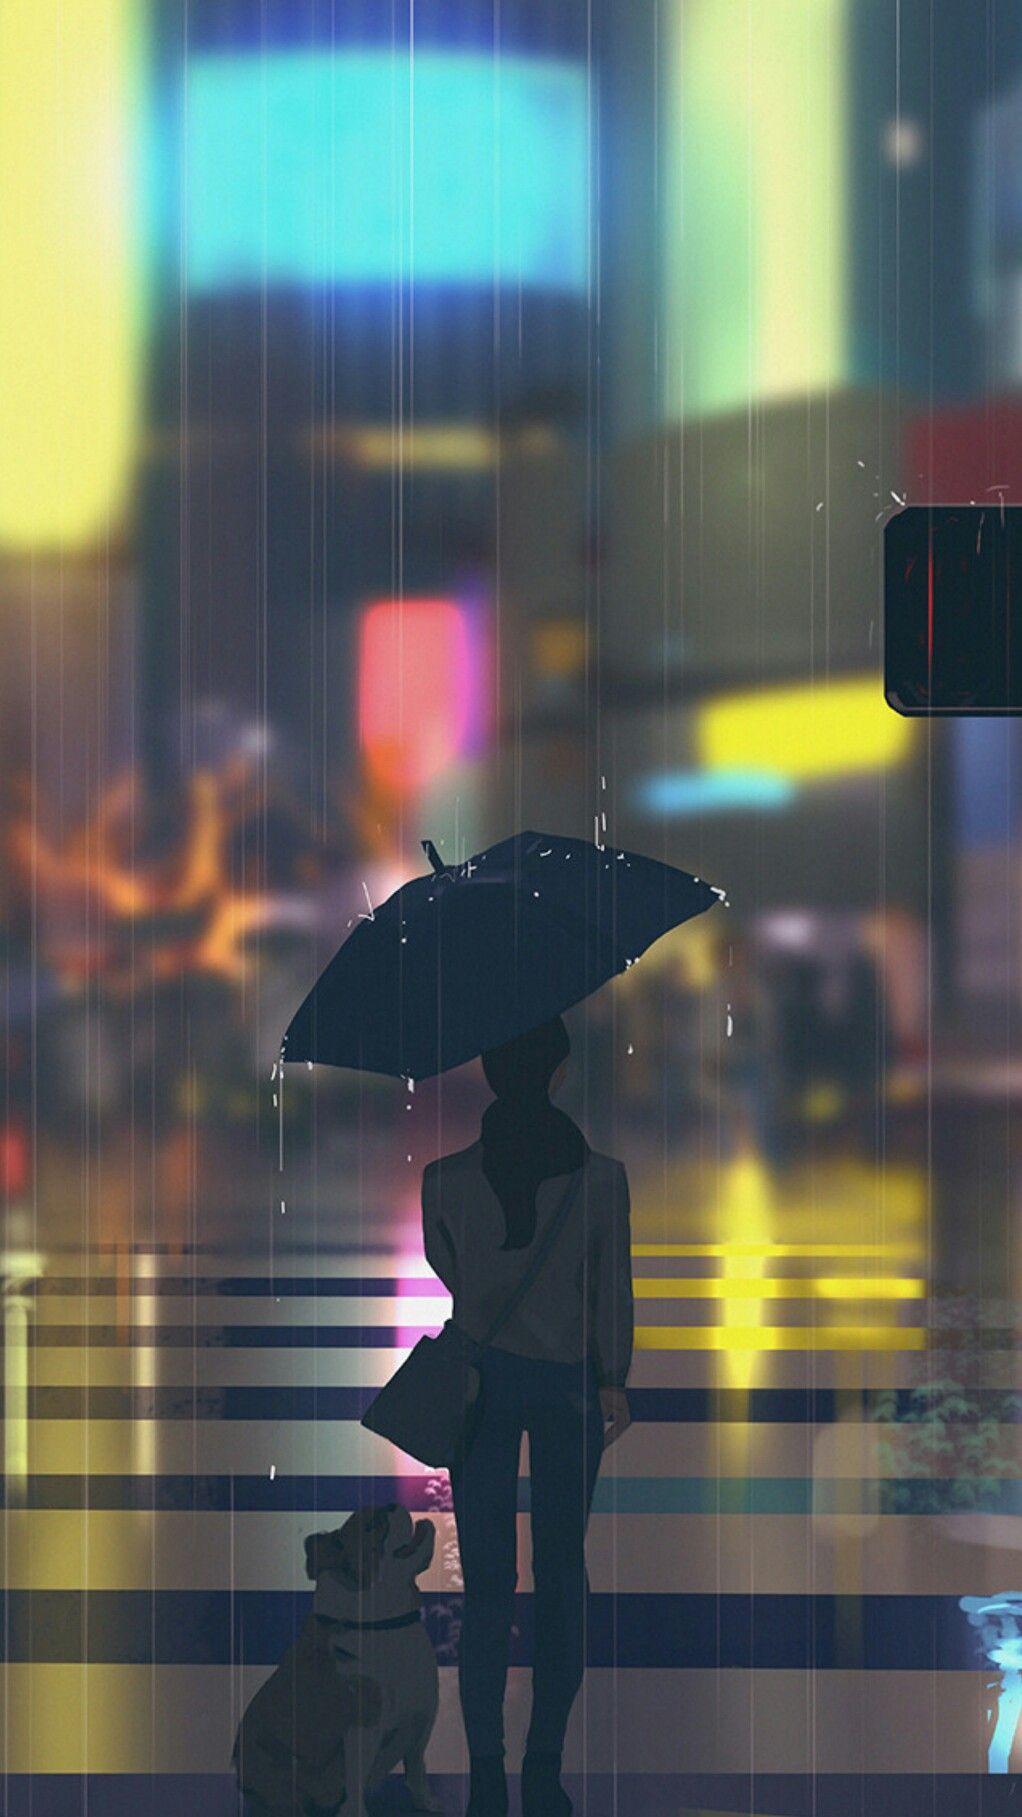 Anime rain images